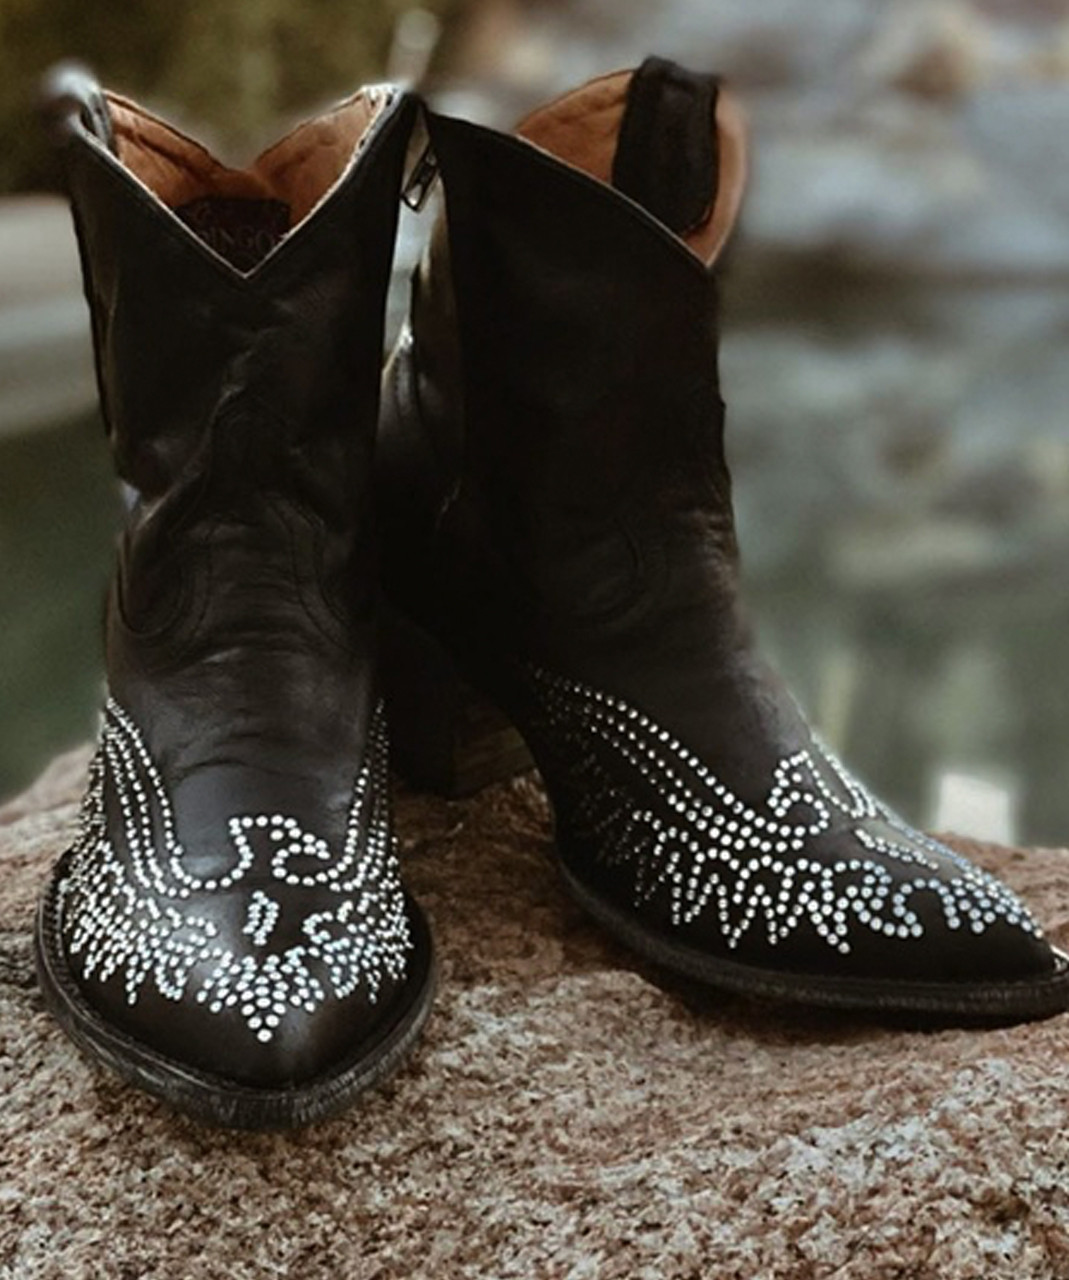 old gringo rhinestone boots